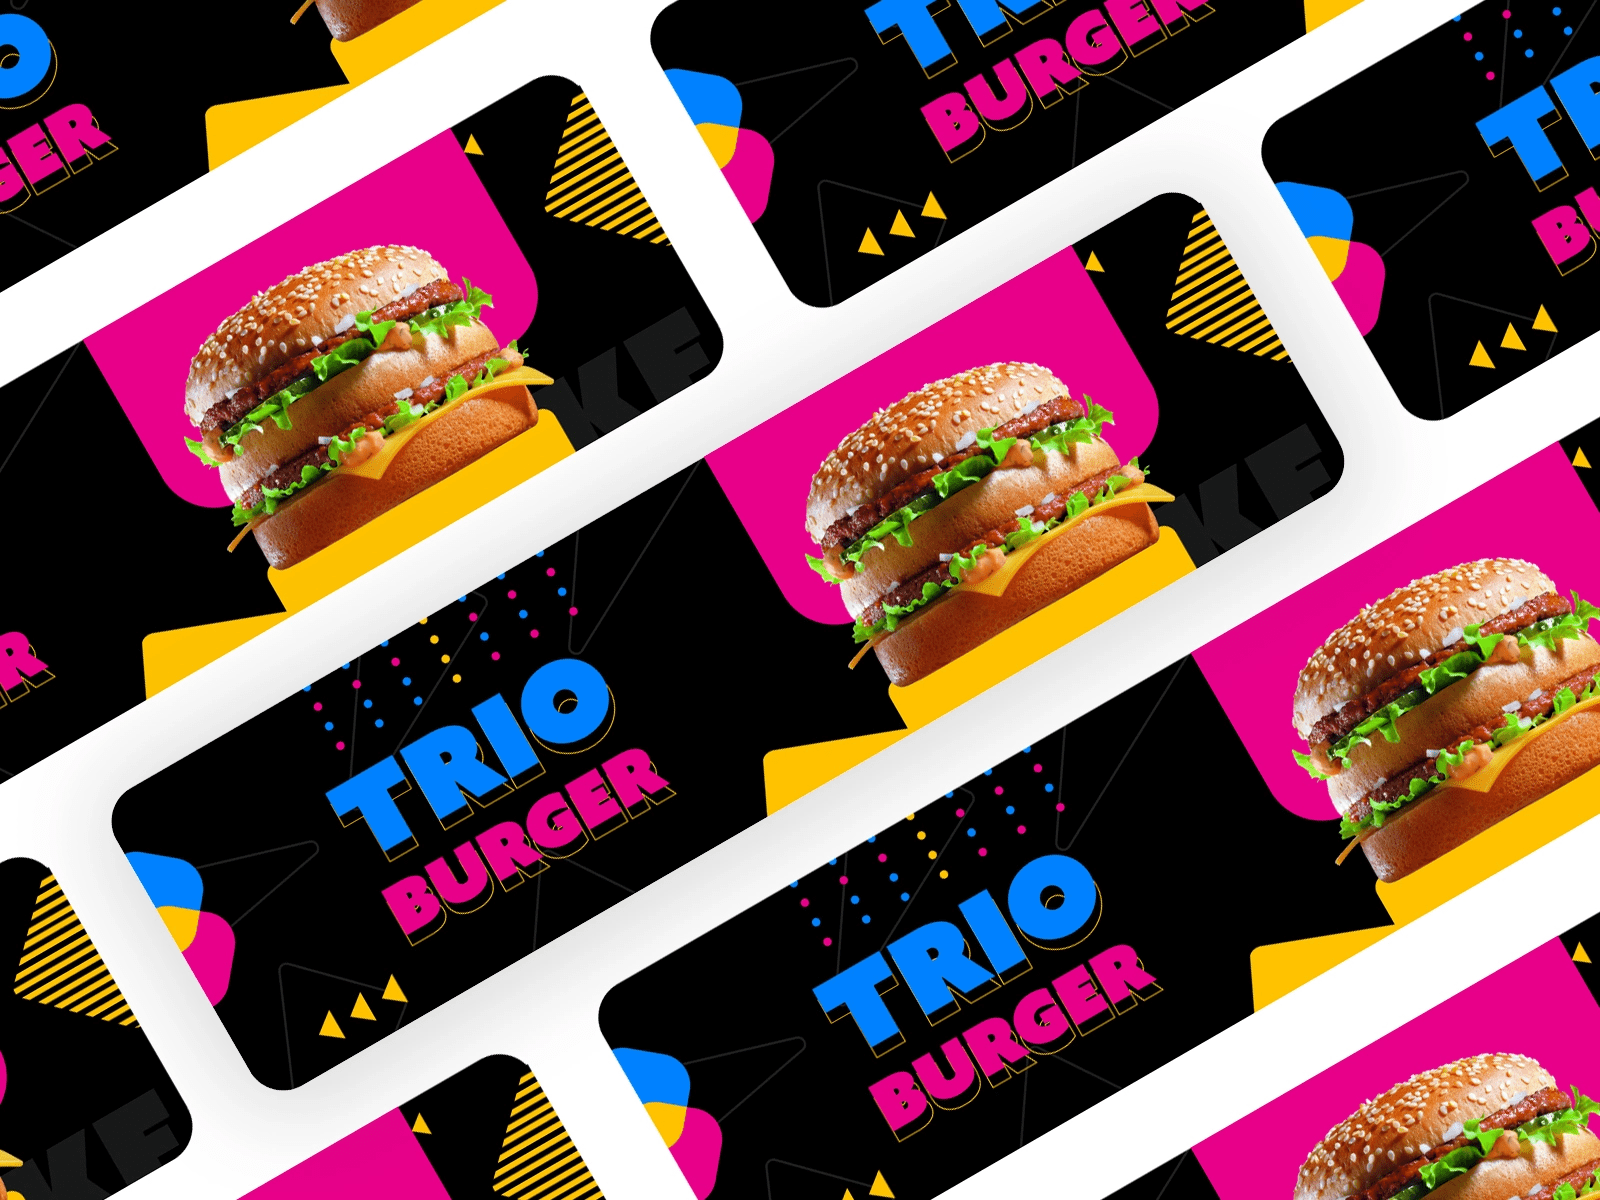 Burger Banner Design by Sandeep Mandloi